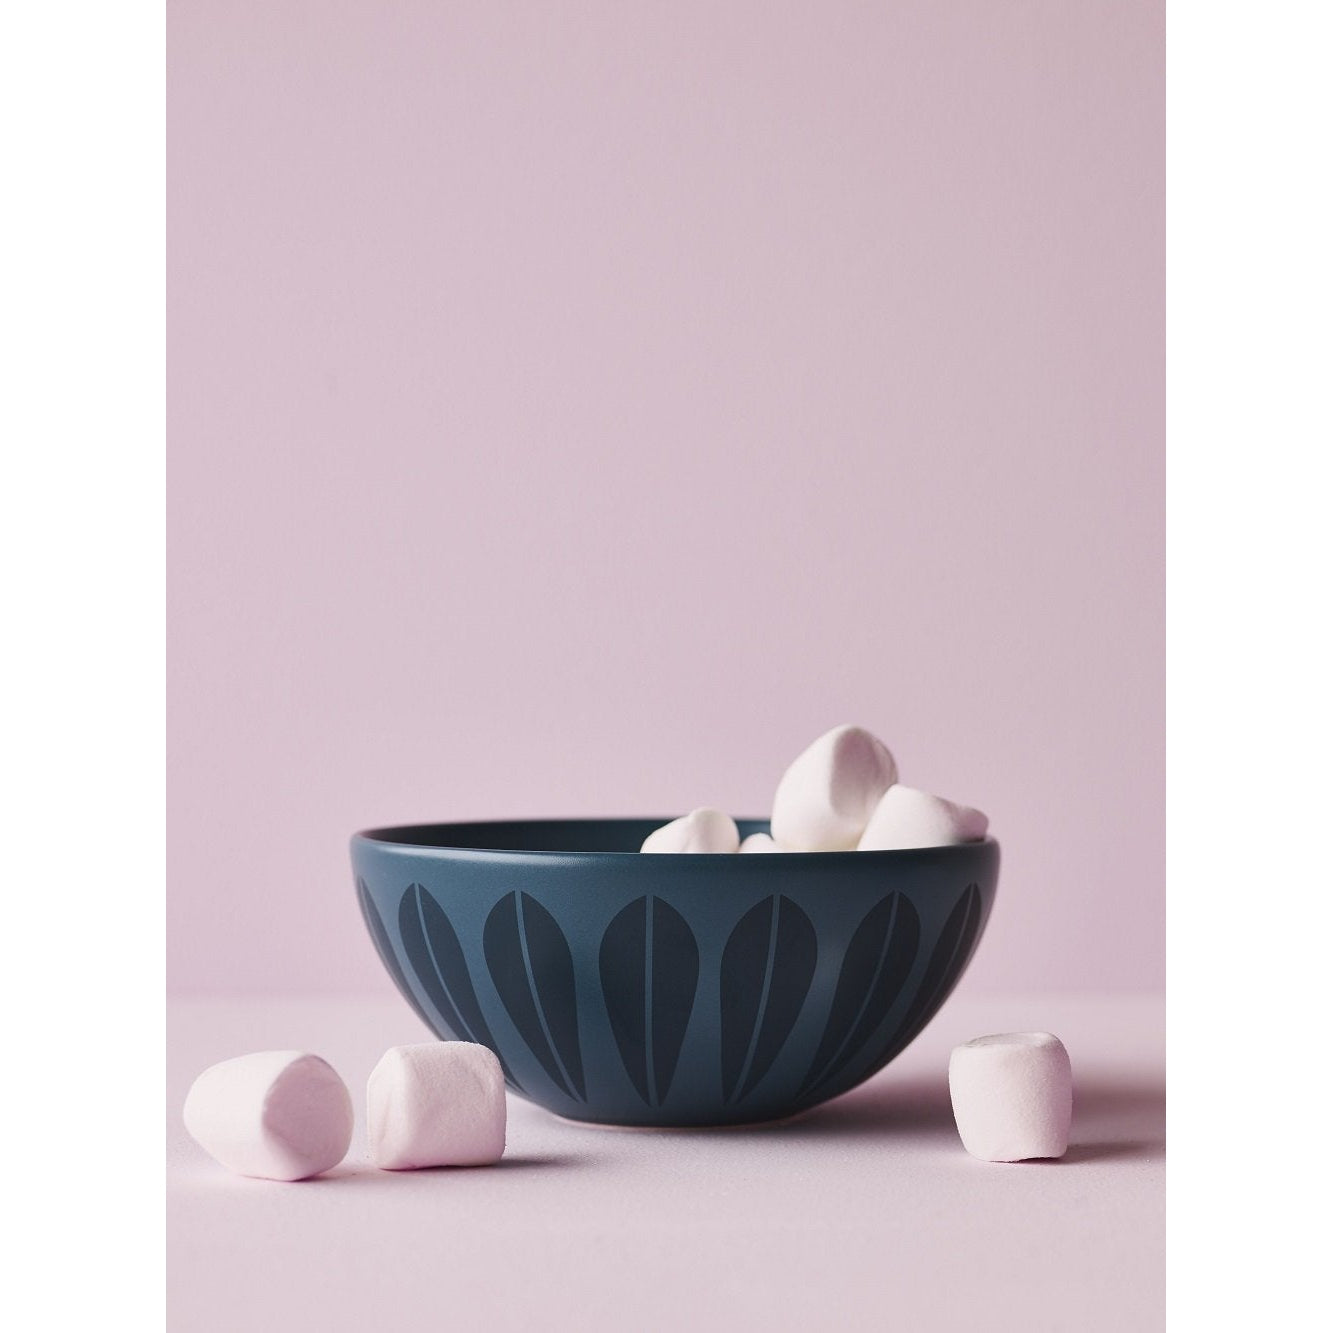 Lucie Kaas Arne Clausen Collection Sugar Bowl, Mint Green